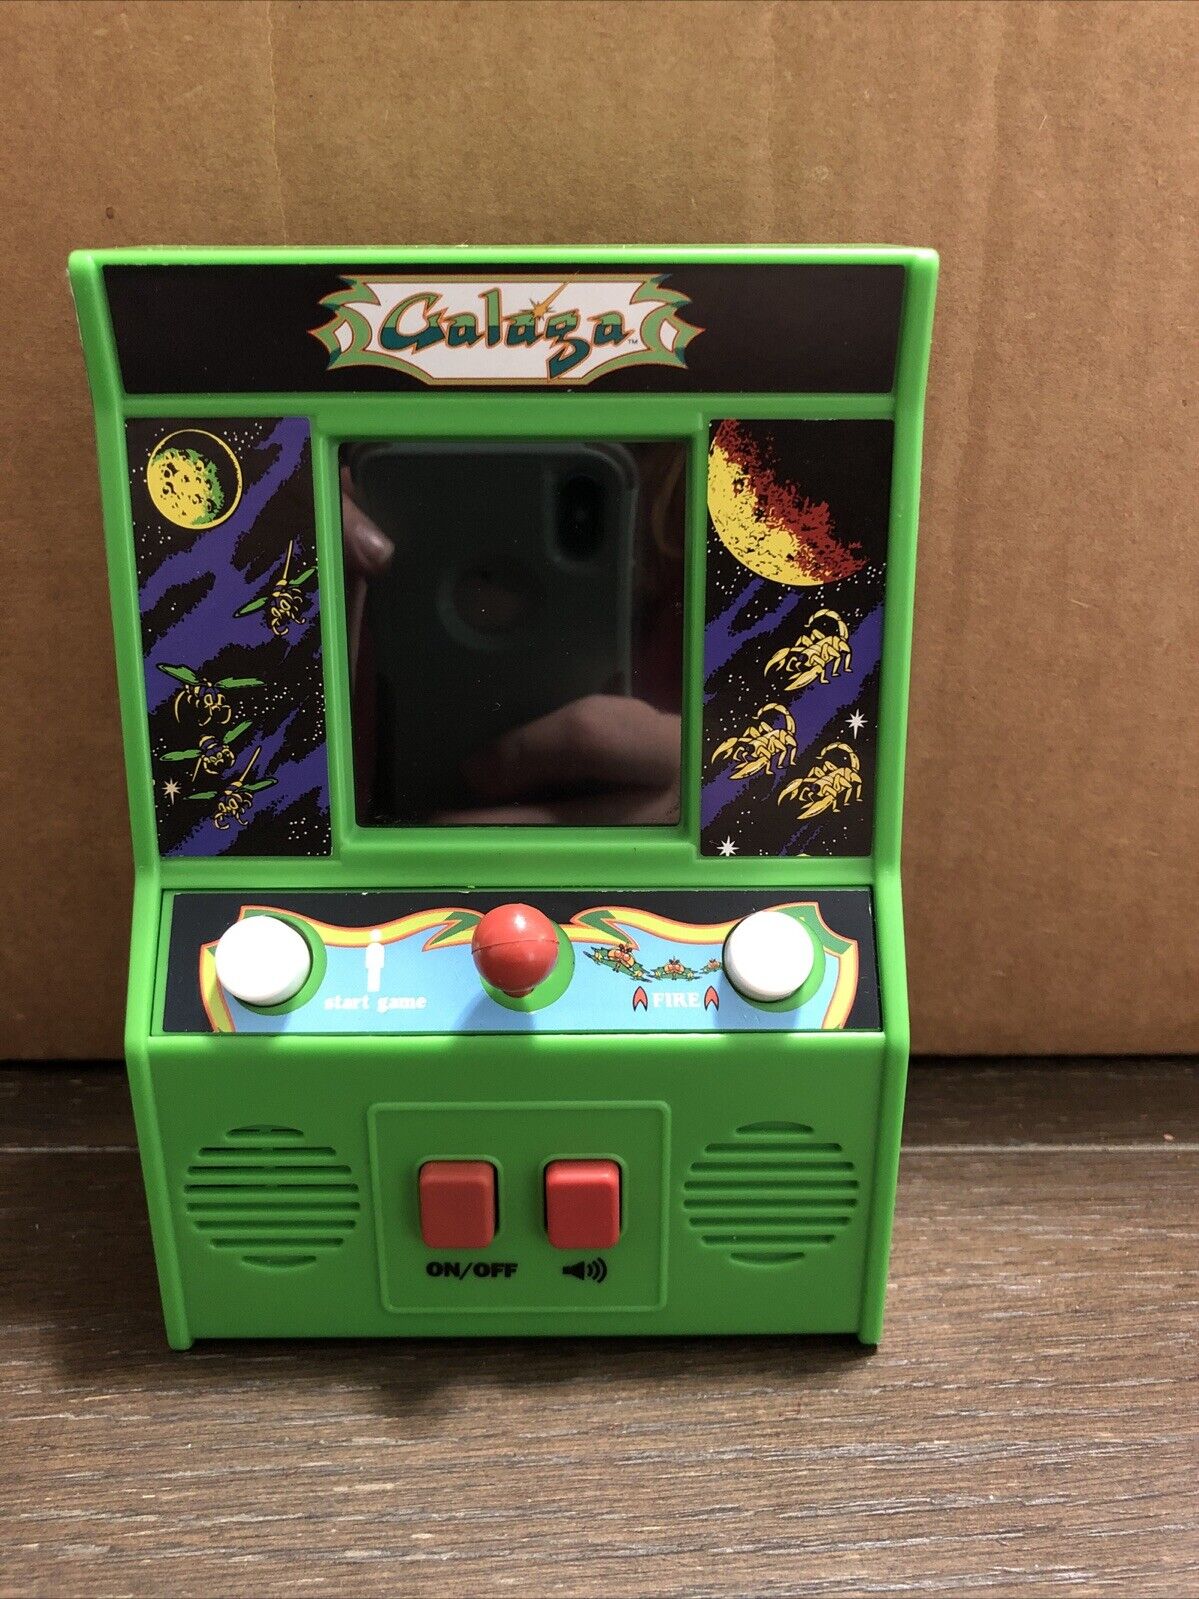 GALAGA 2018 Mini Hand Held Video Arcade Game Machine GALAGA